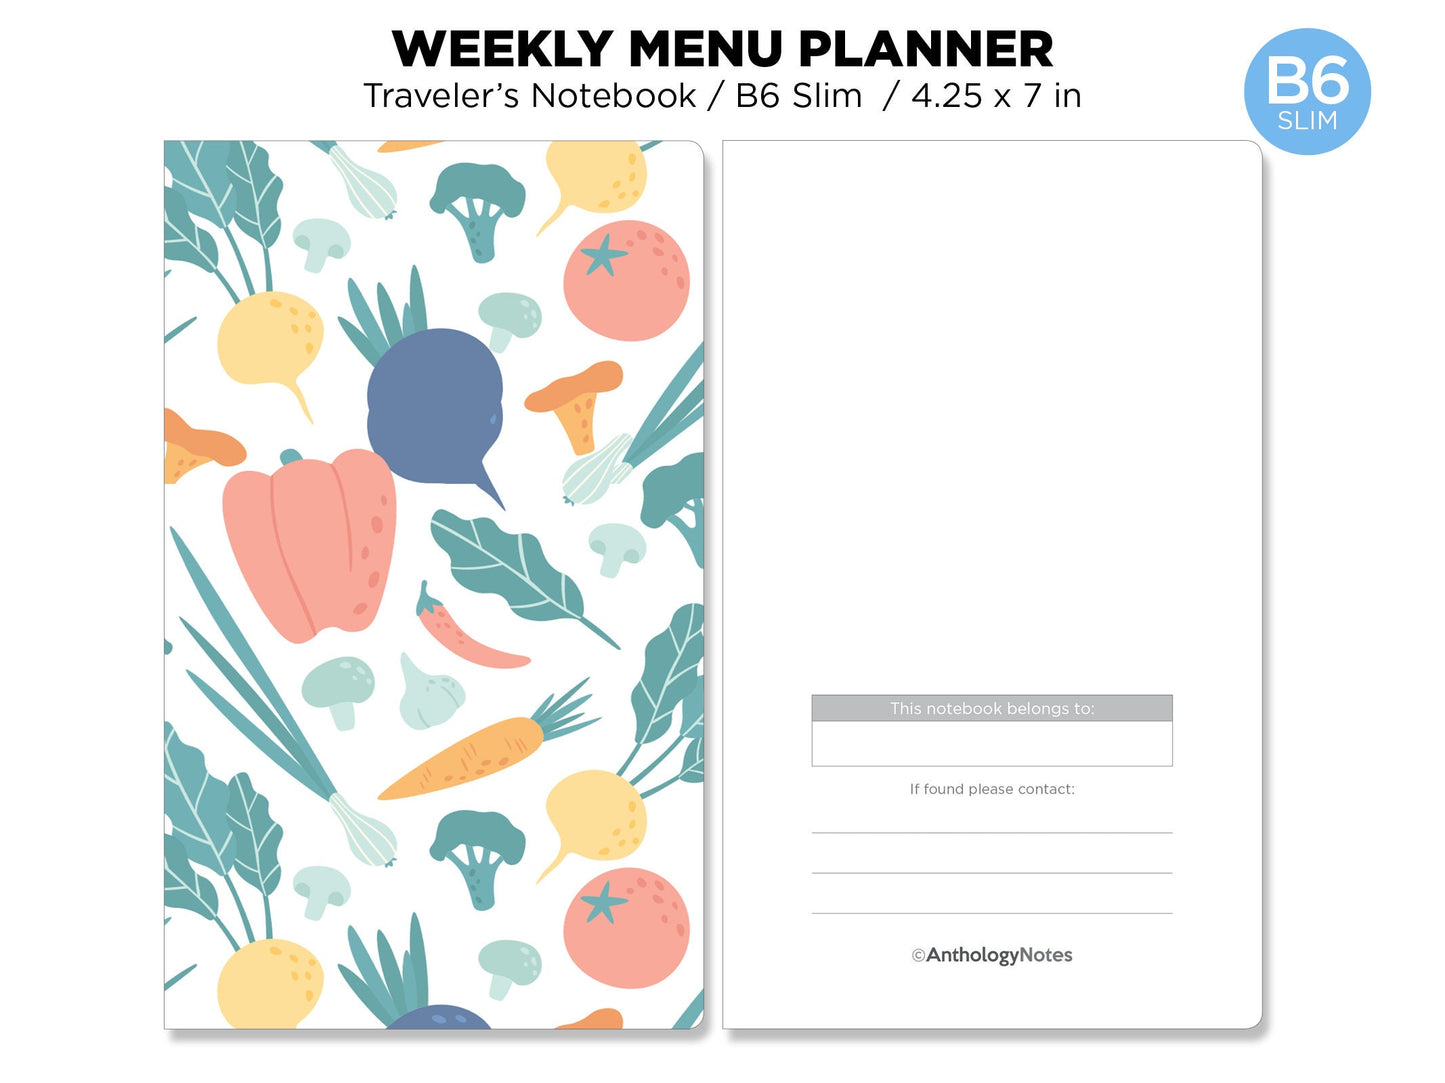 TN B6 SLIM MENU Planner with Grocery List Printable Traveler's Notebook Insert